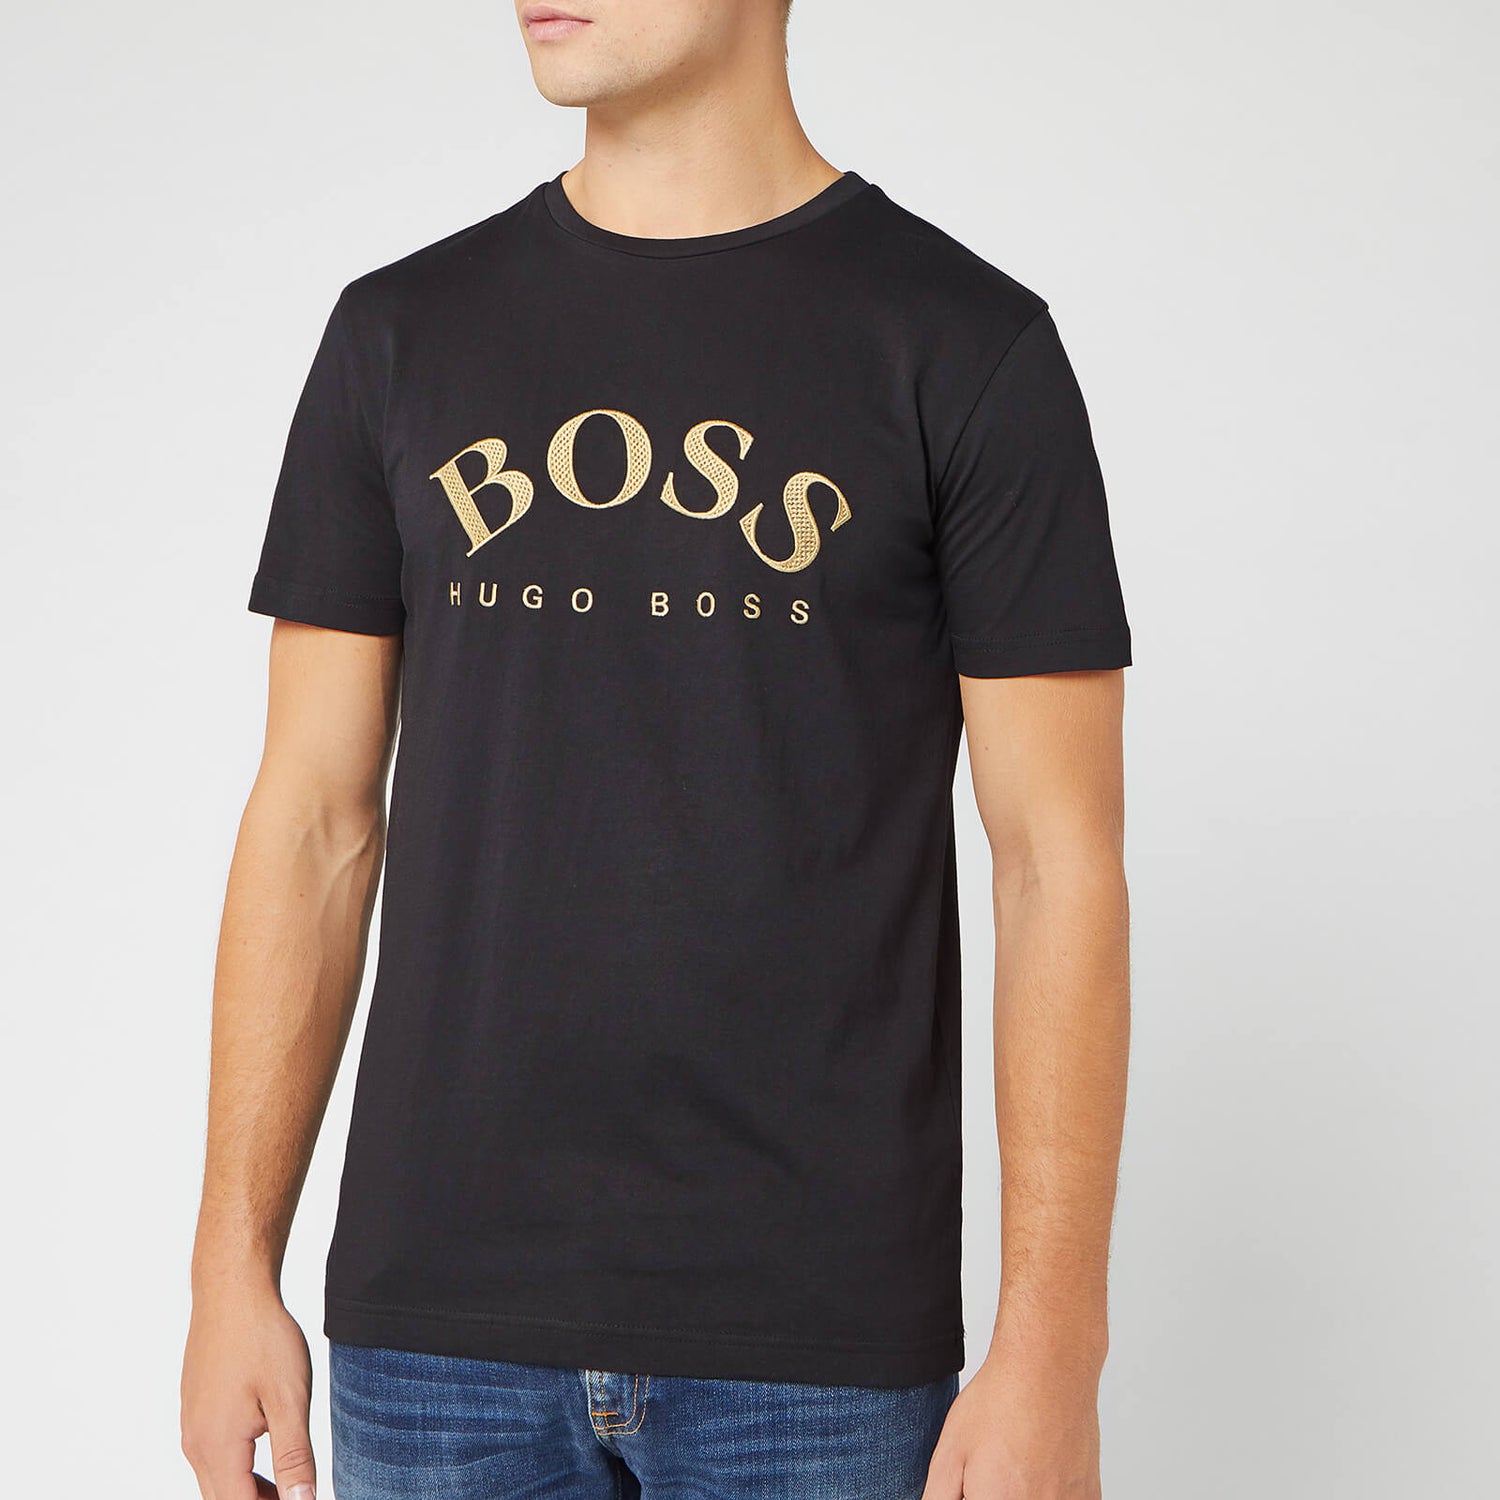 BOSS Tee T Shirt in Black & Gold